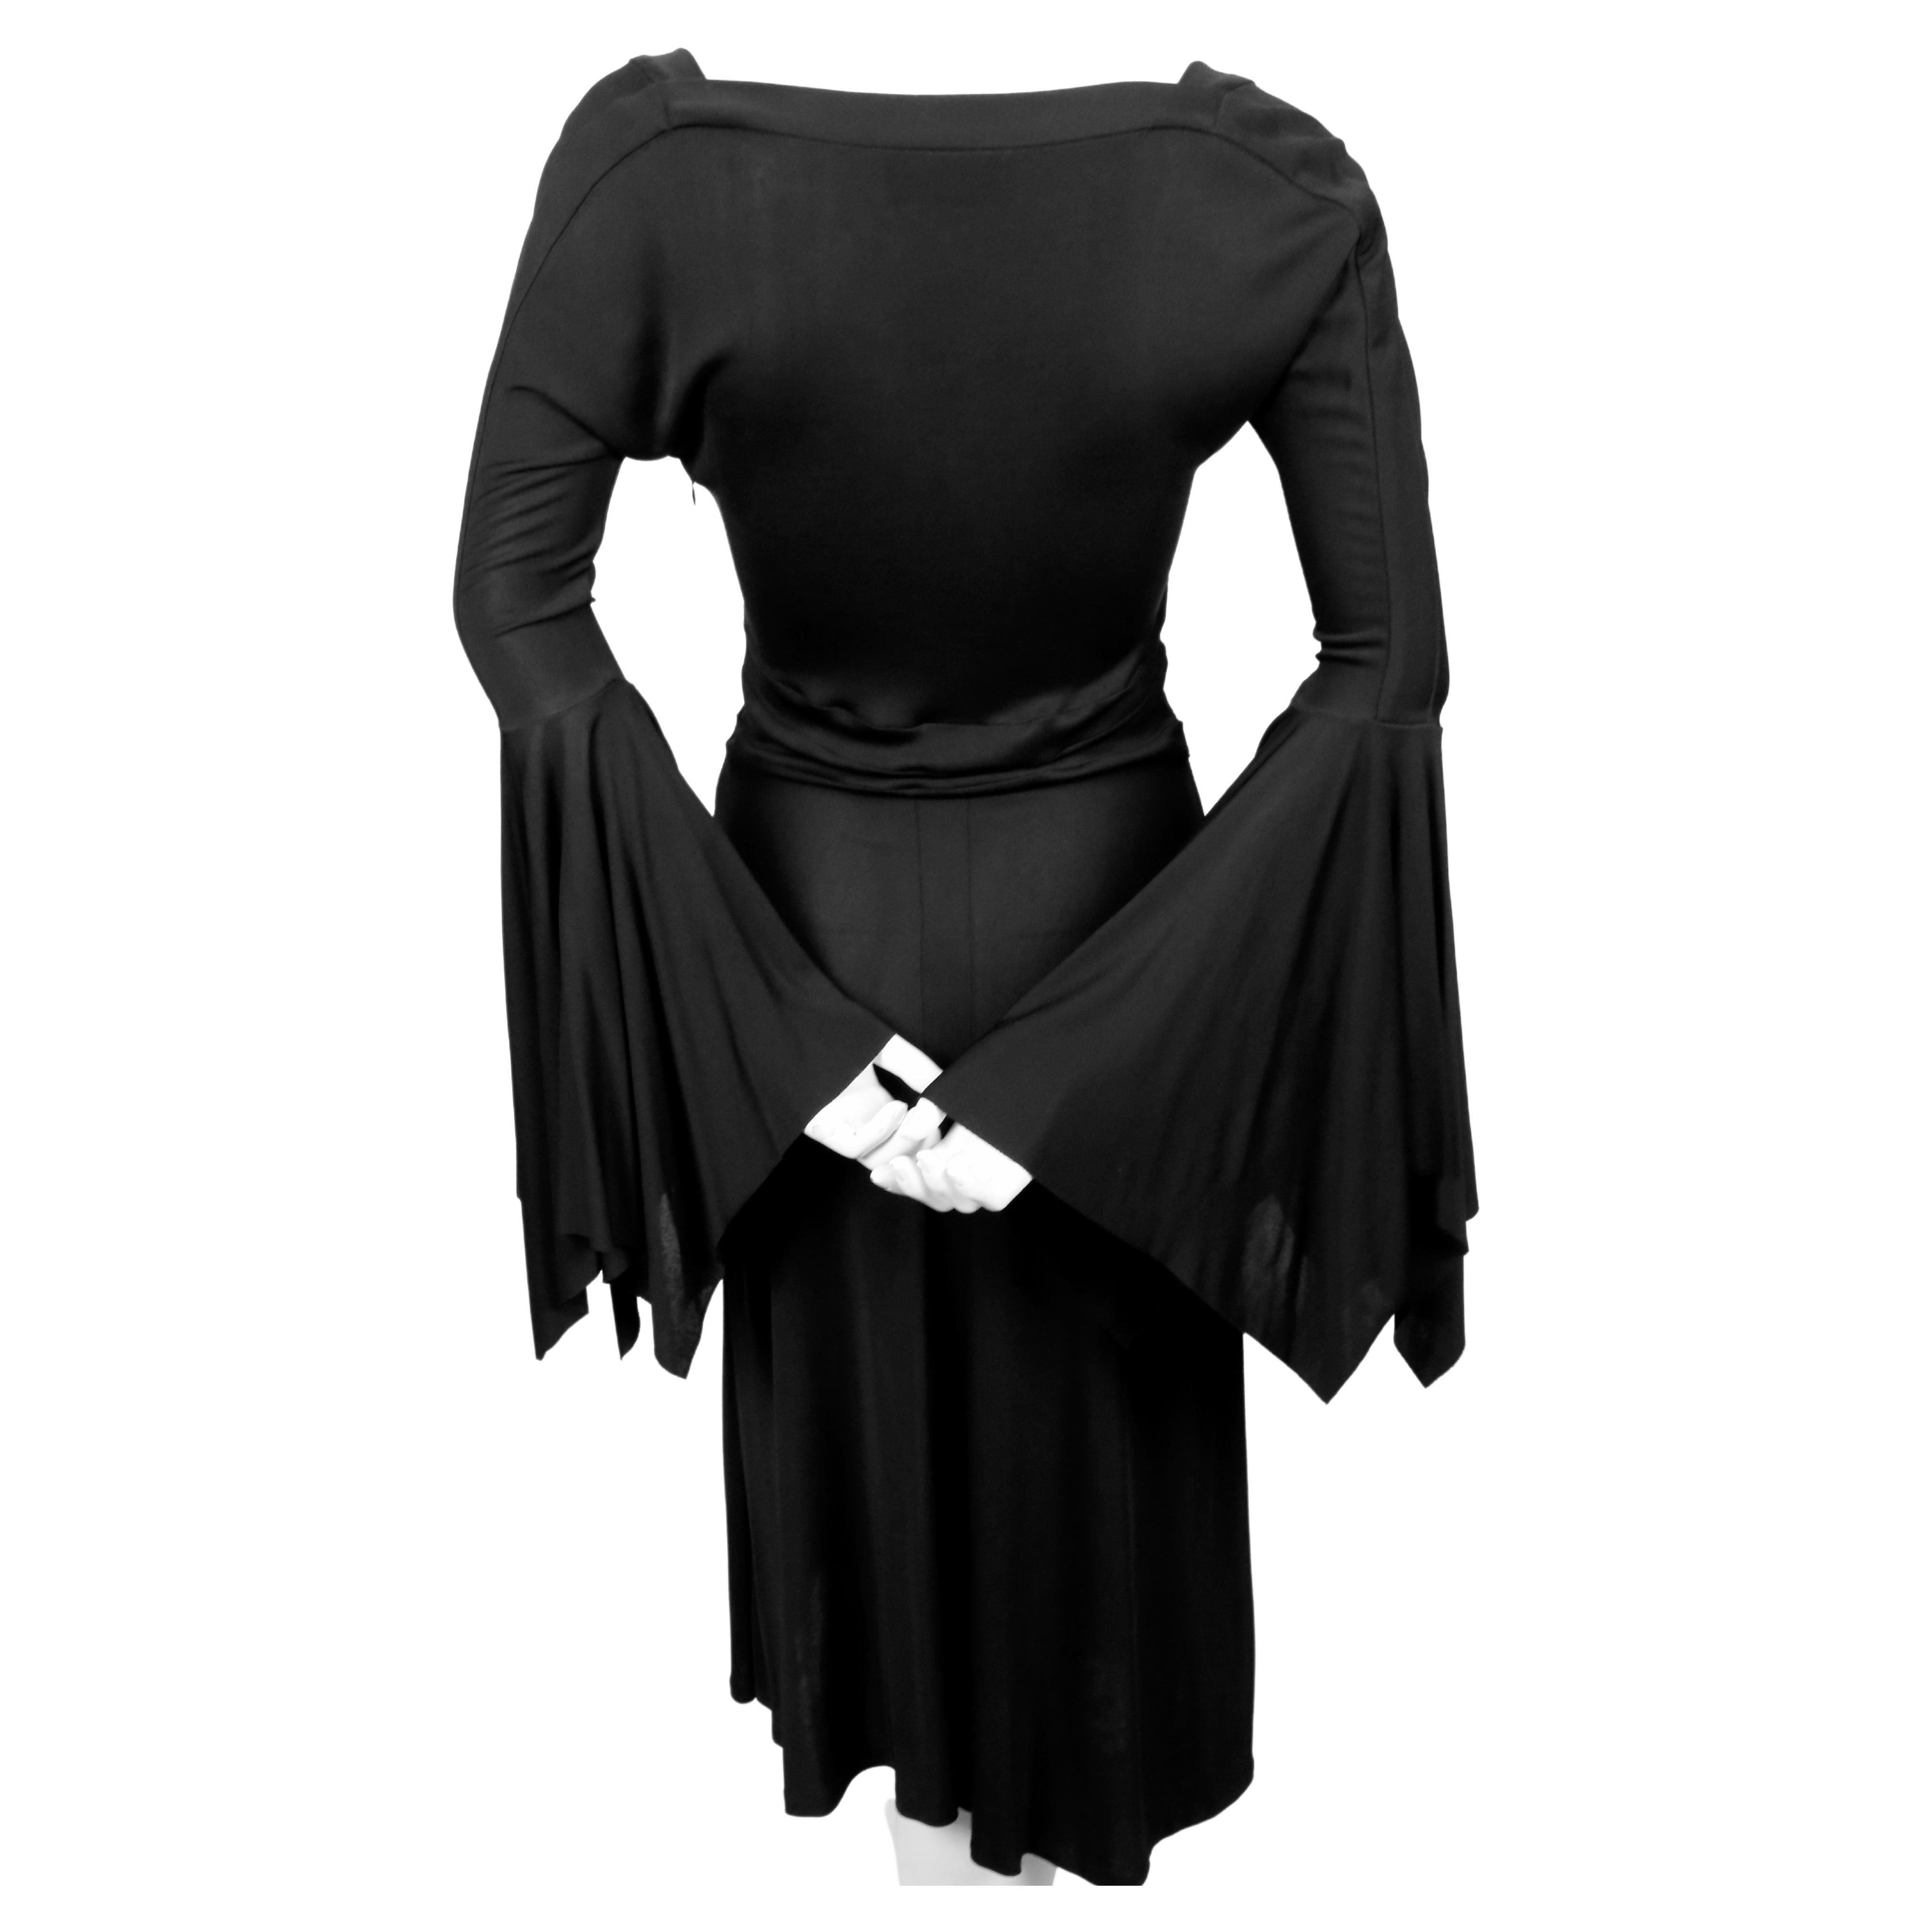 Black 2003 TOM FORD for YVES SAINT LAURENT black runway dress with rose